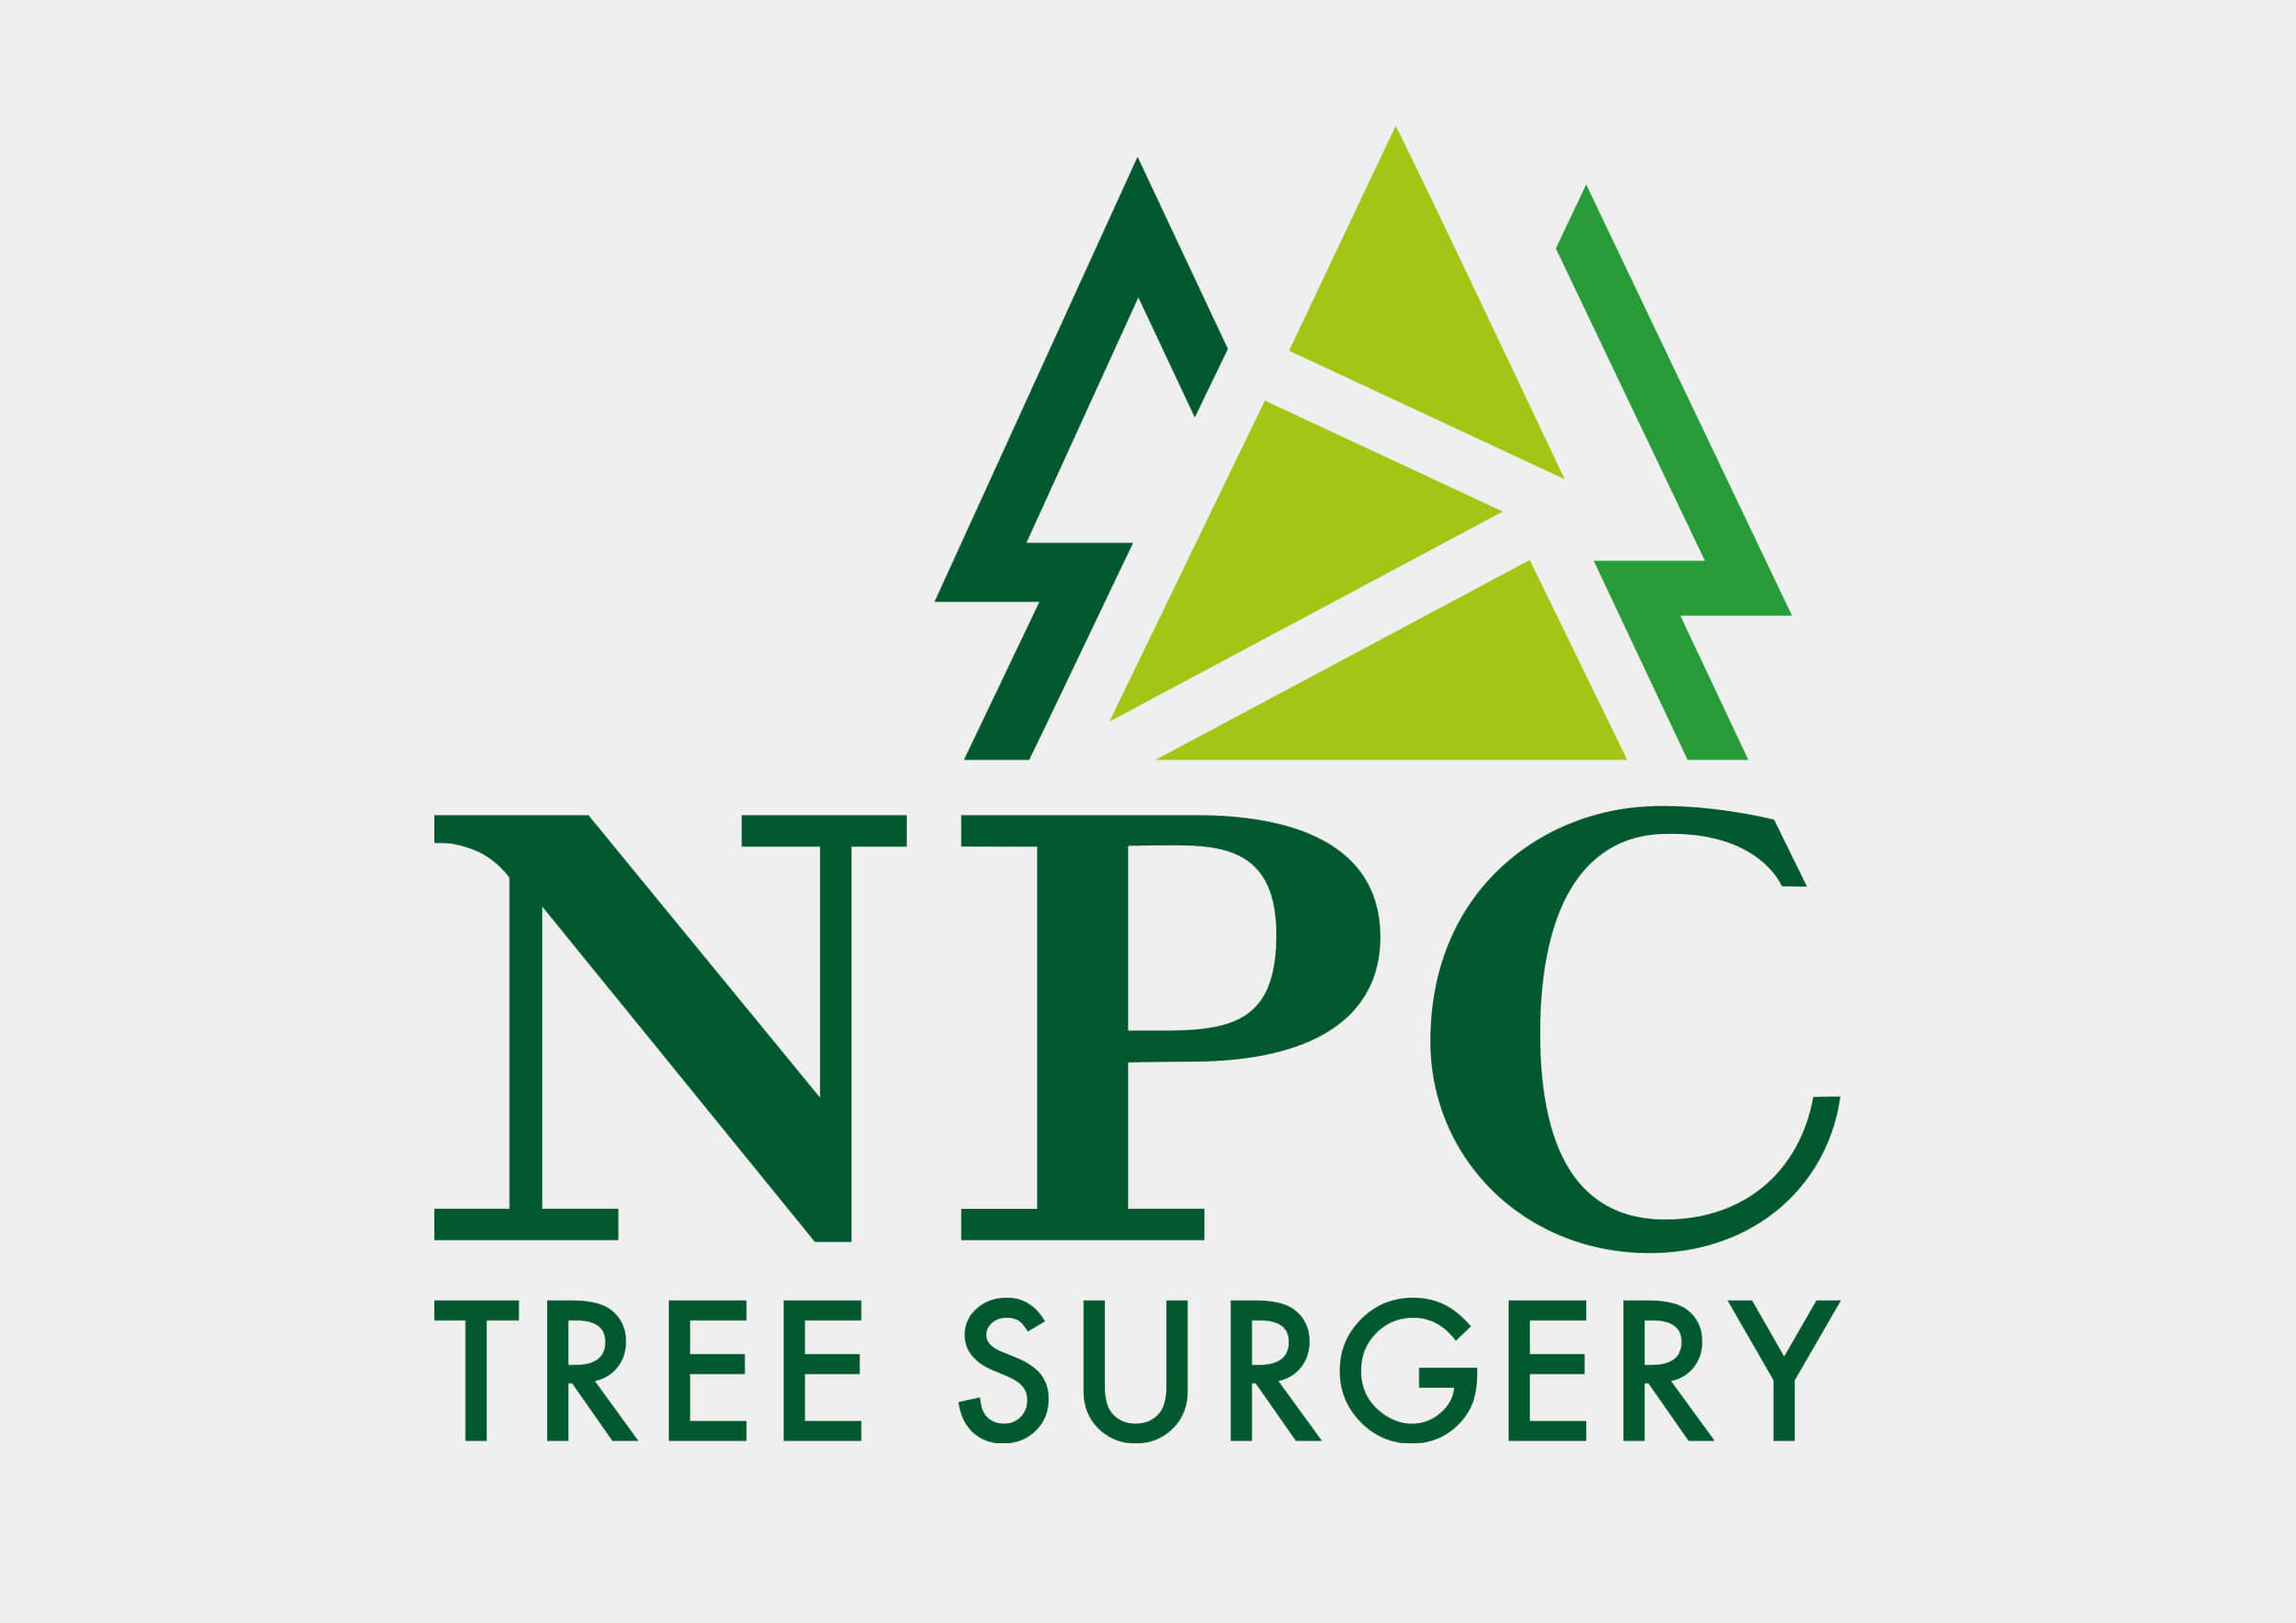 NPC Tree Surgery new logo portrait version